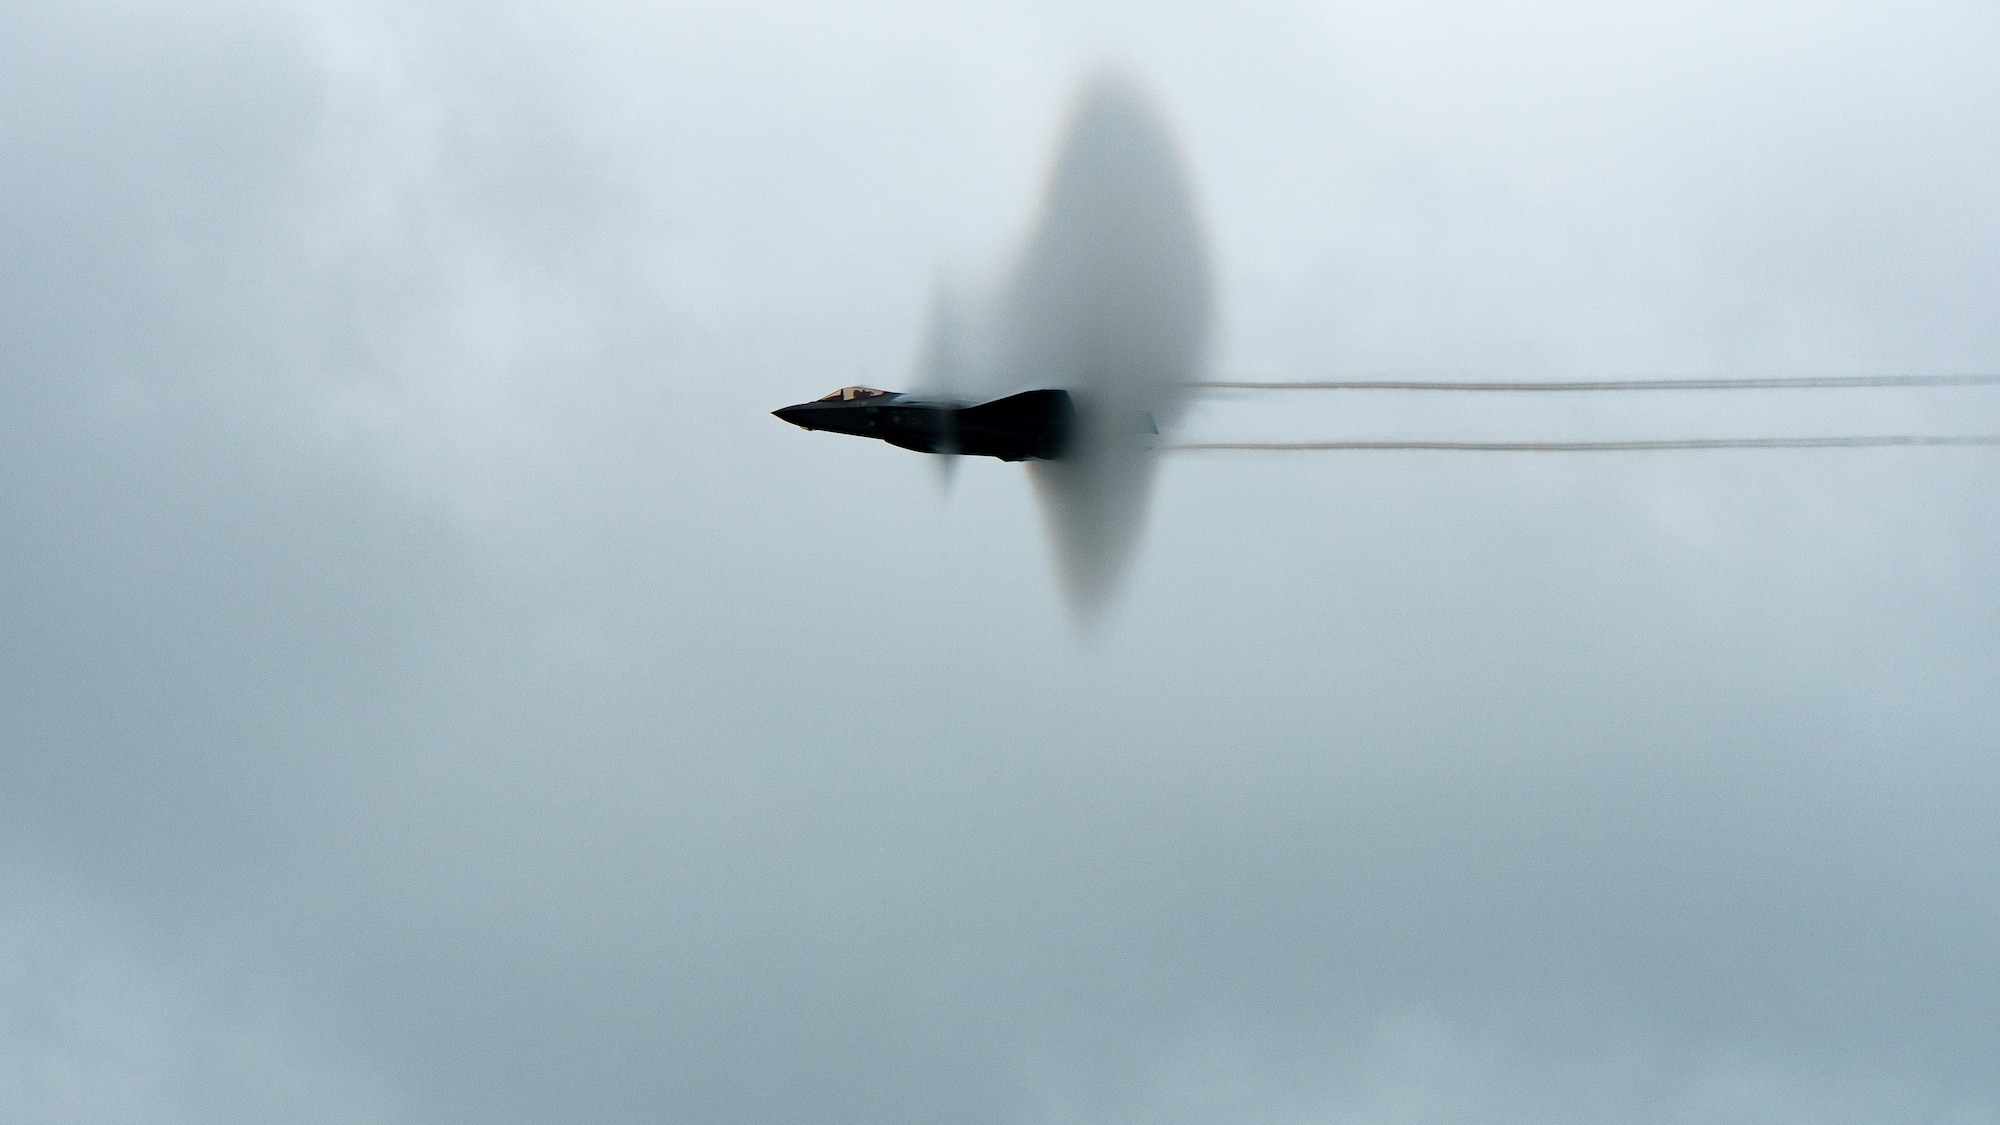 aircraft flying through vapor ring